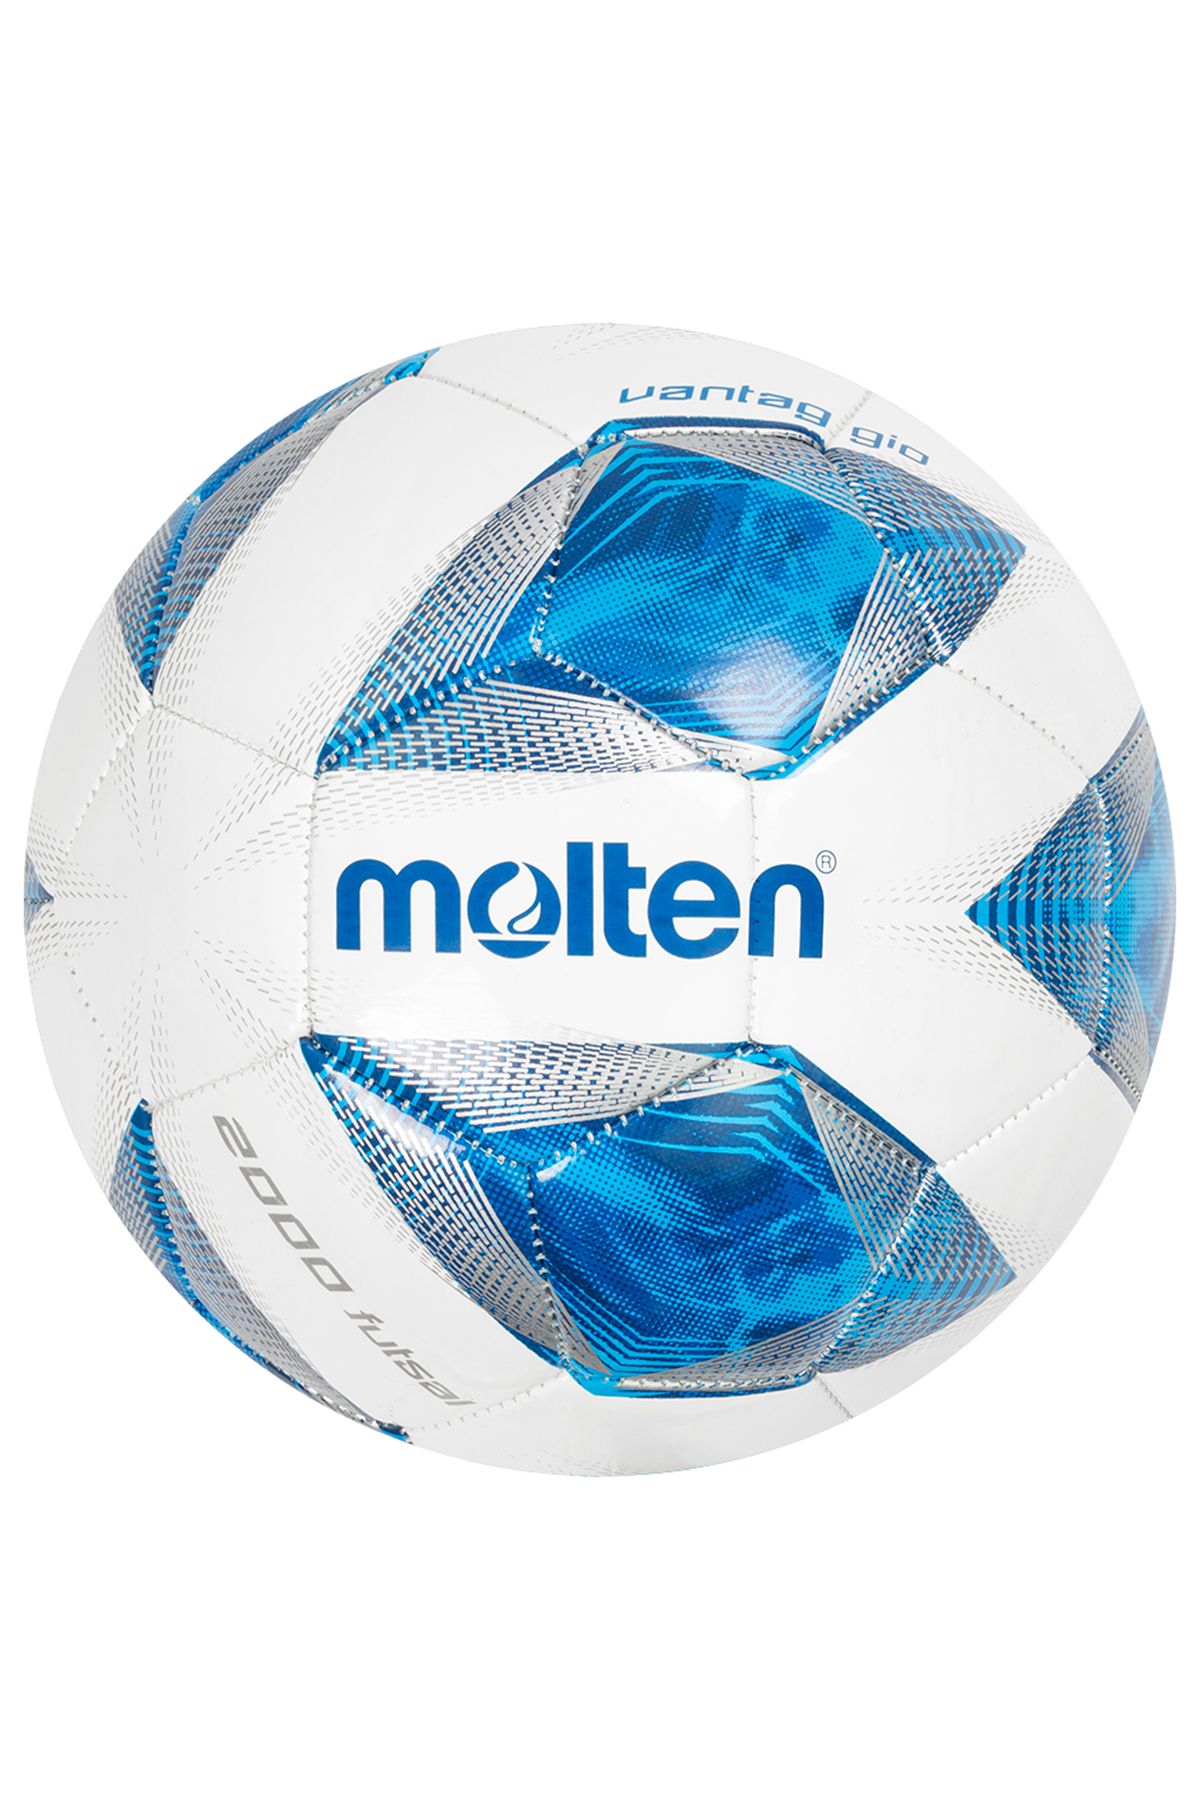 Molten F9A2000 4 No Salon Futbolu (Futsal) Topu